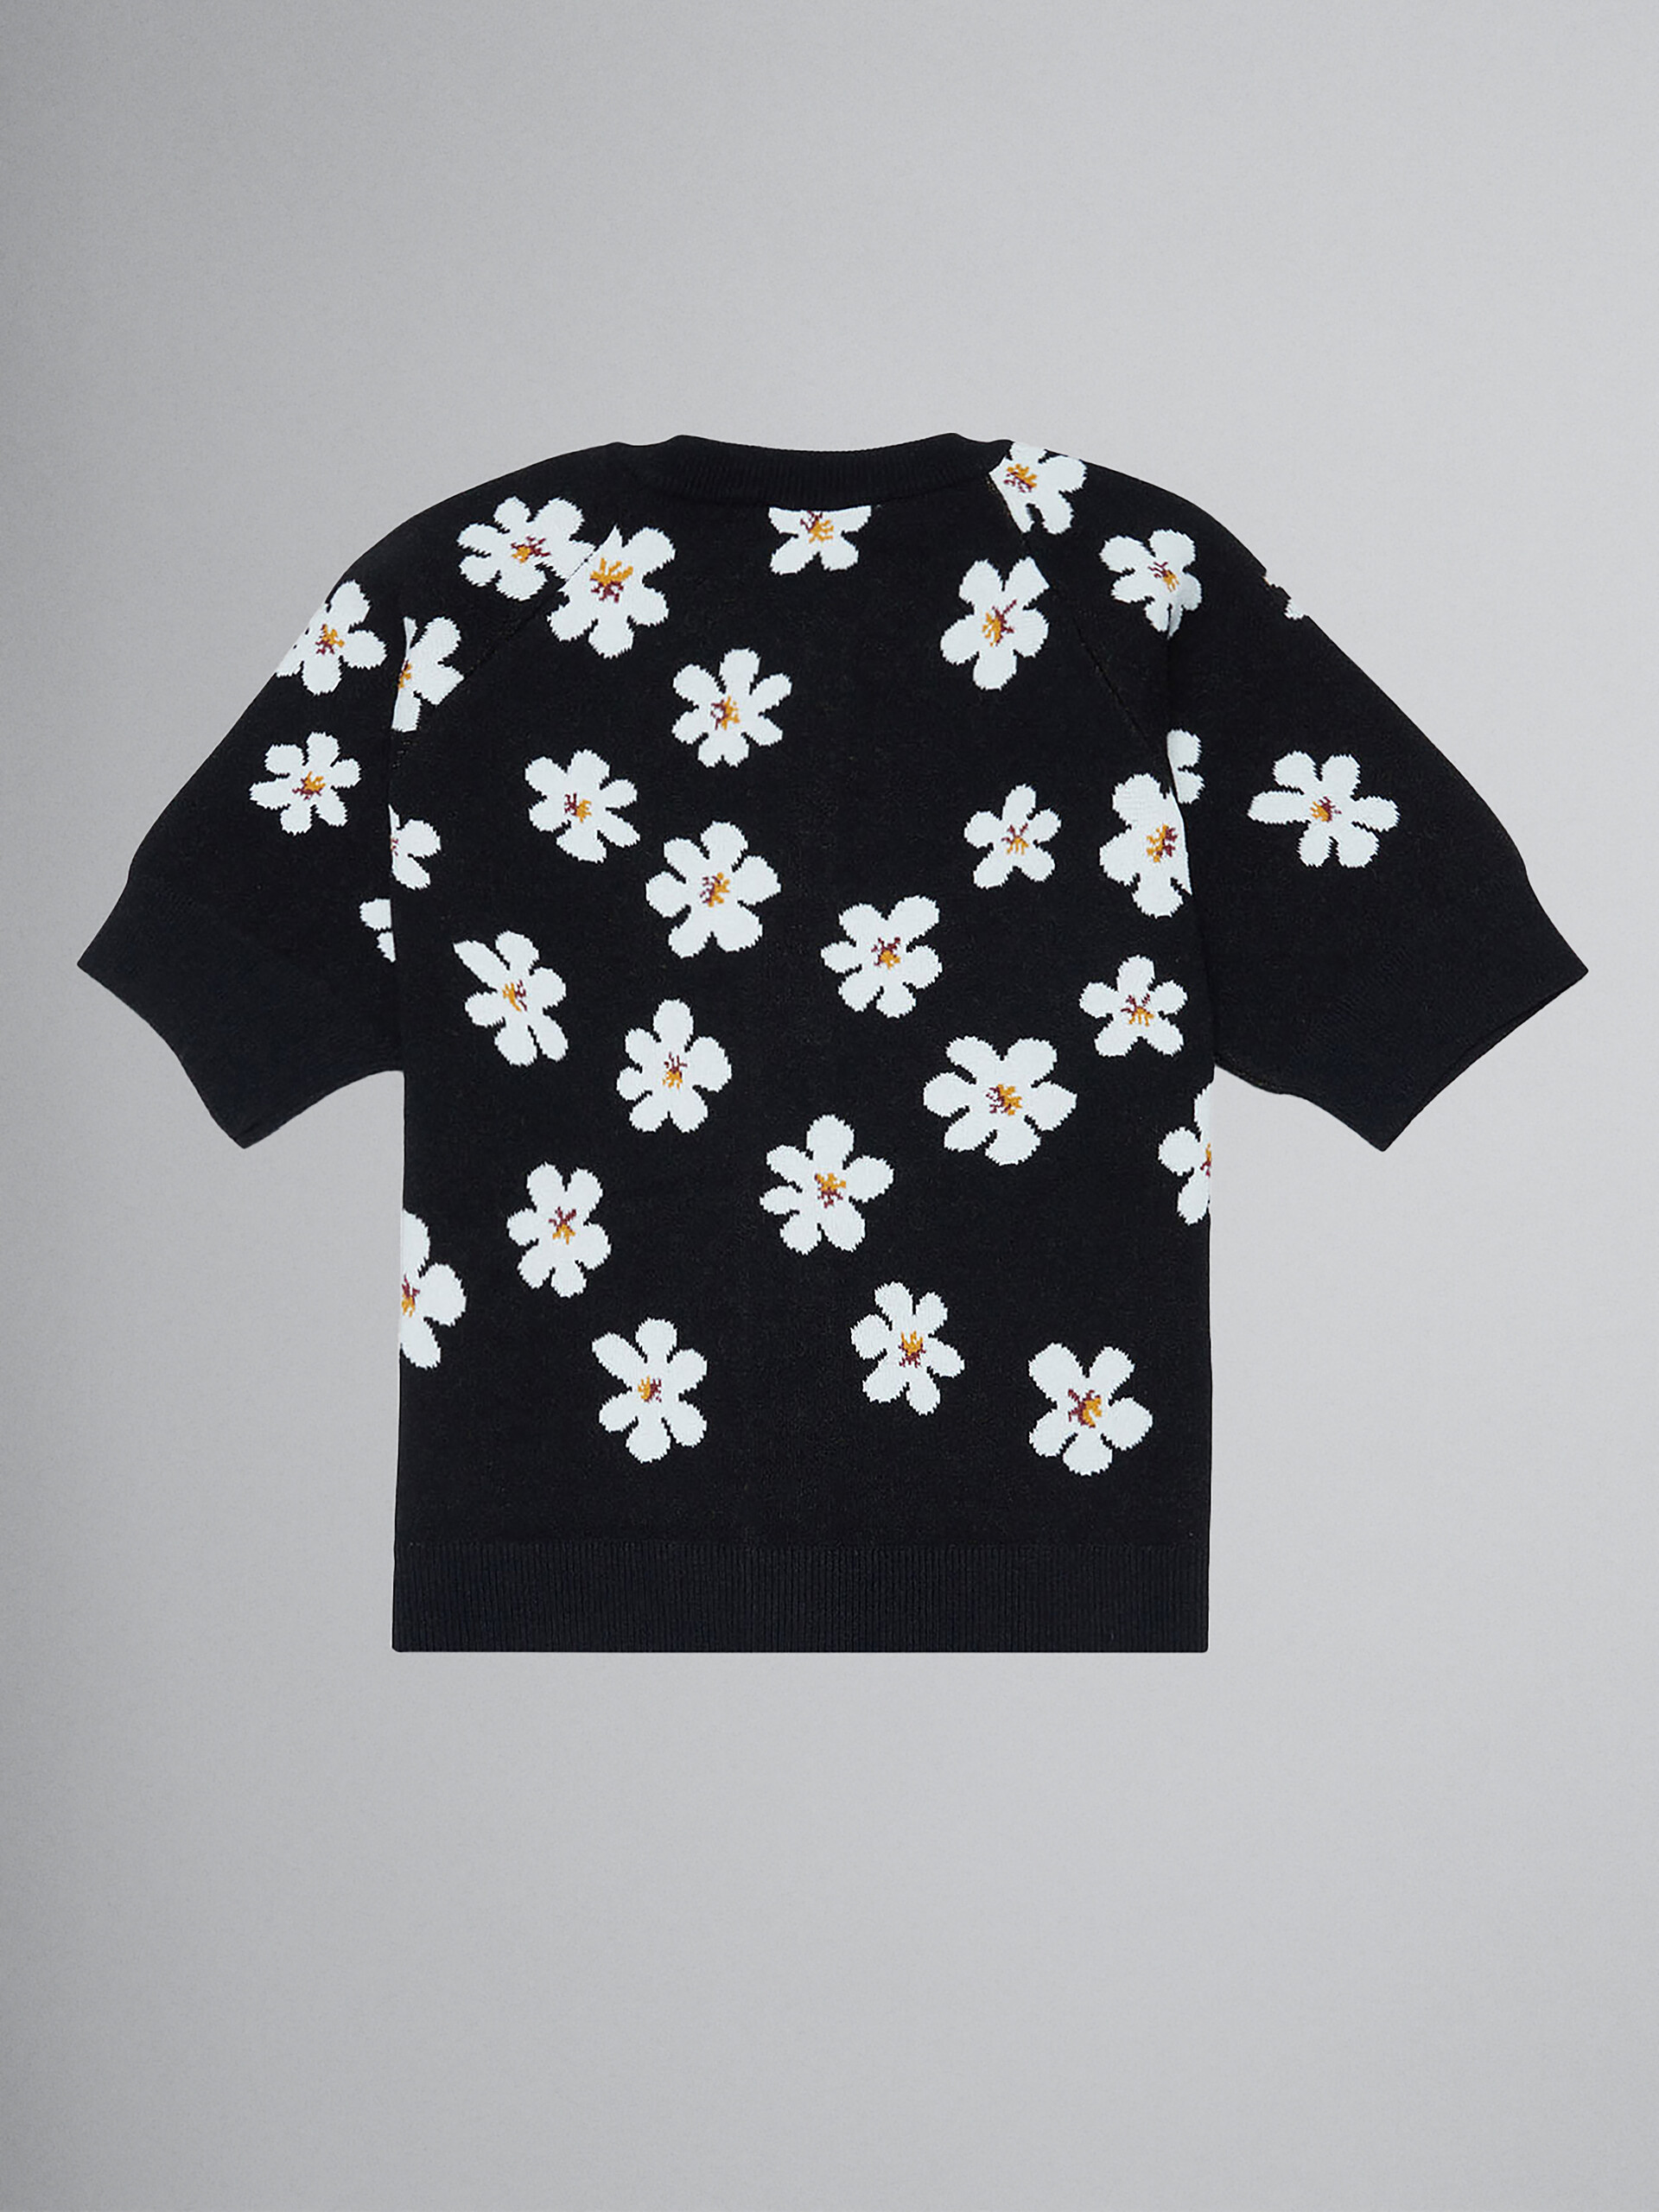 Black cardigan with jacquard Daisy motif - Knitwear - Image 2